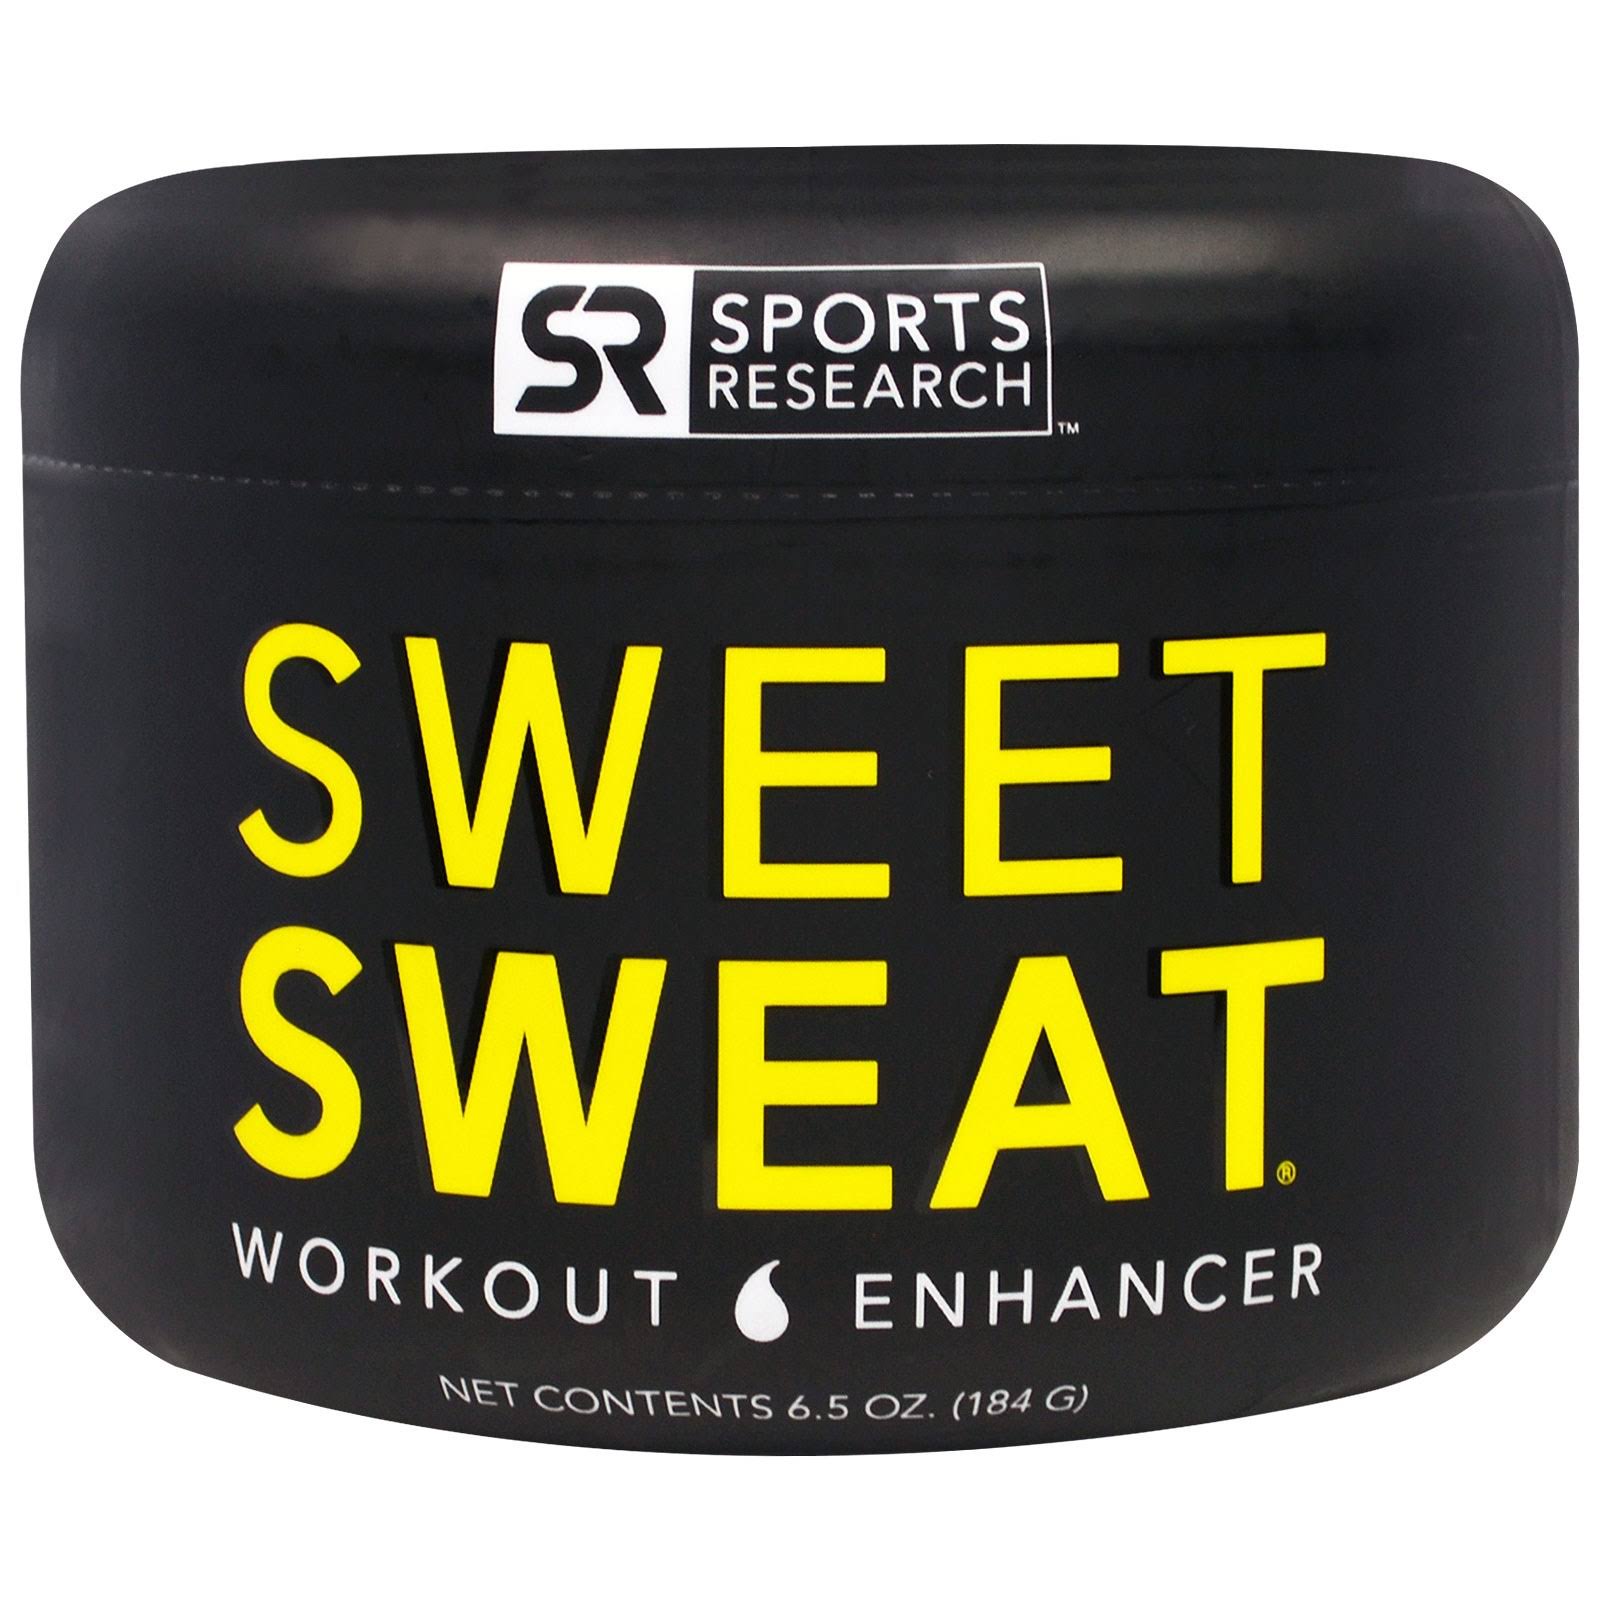 Sports Research Sweet Sweat Workout Enhancer